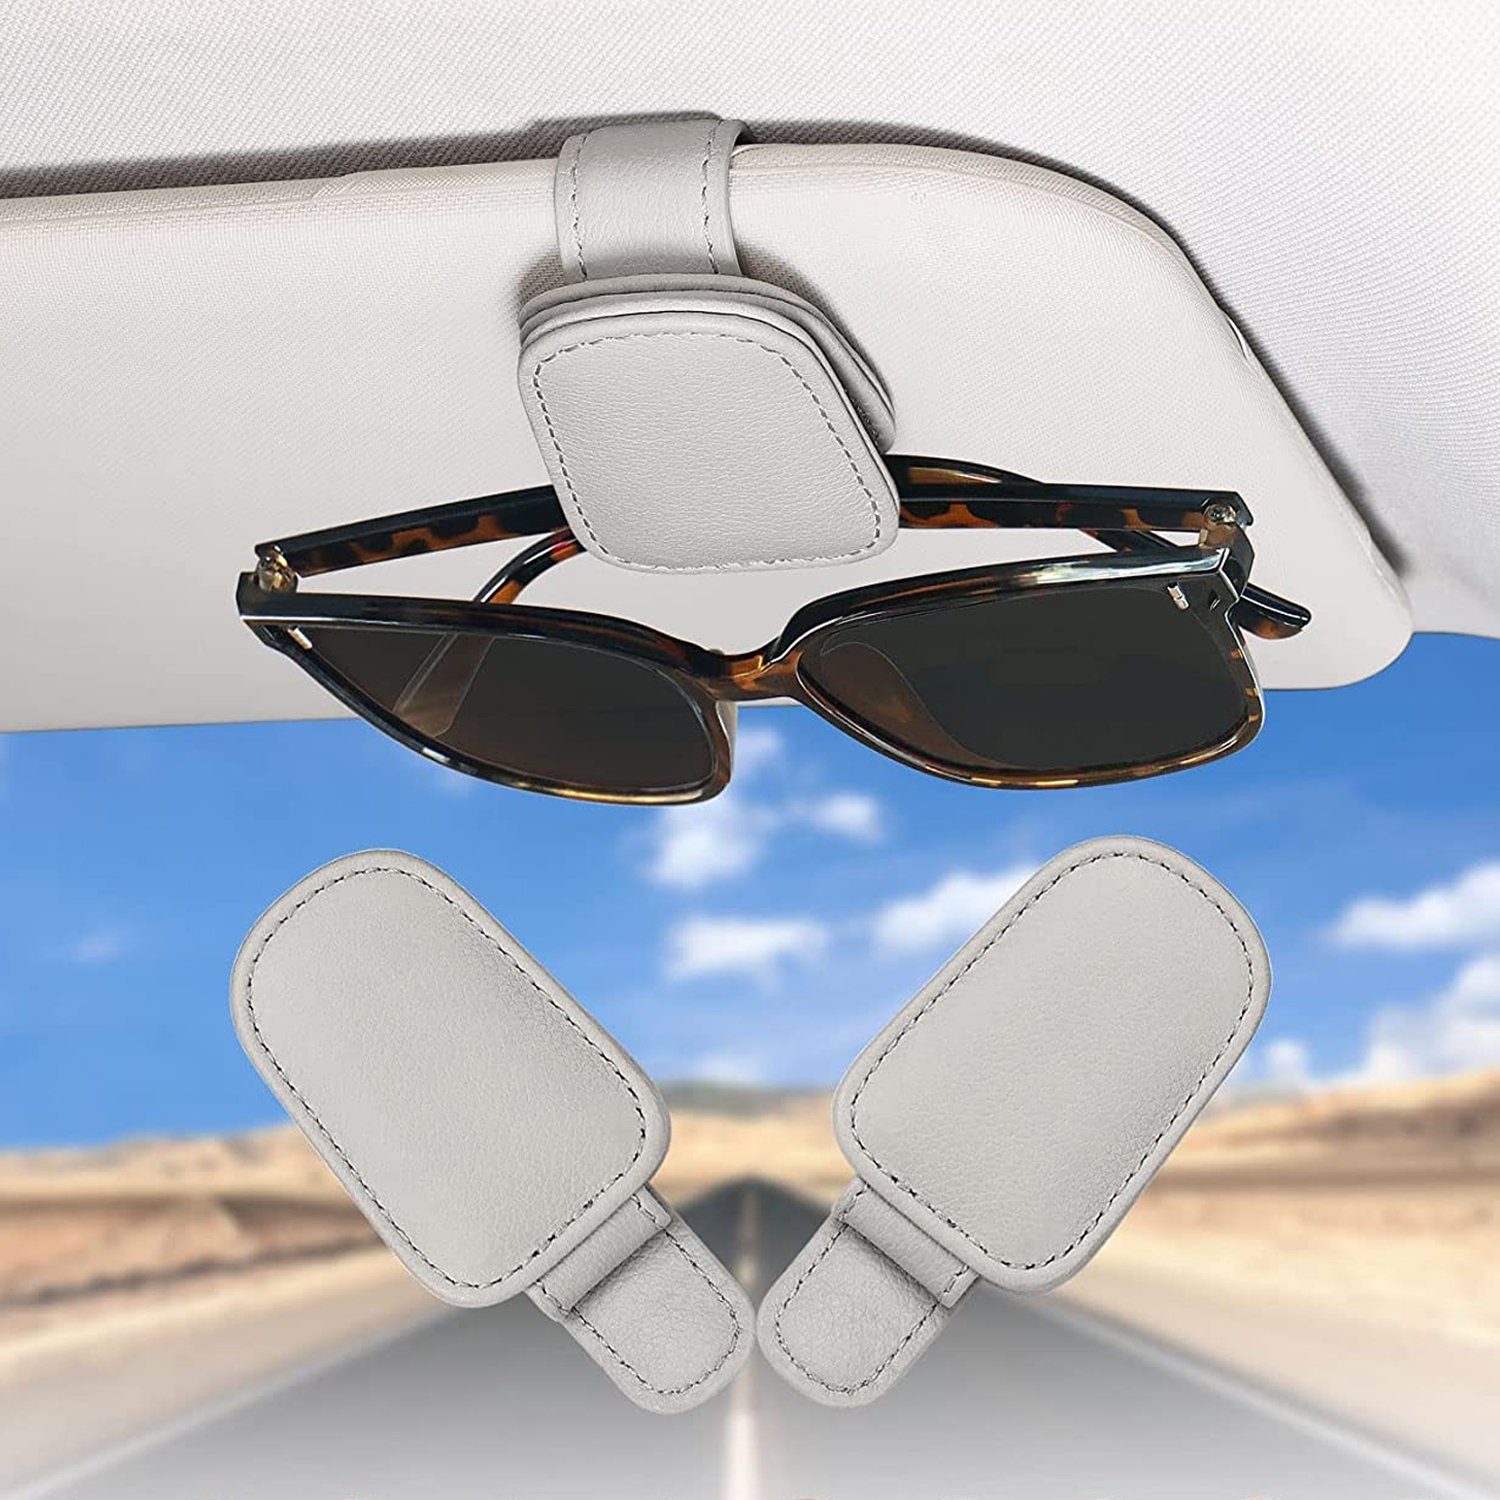 Brillenhalter Auto Sonnenblende, Pack Grau NUODWELL Visier 2 Autosonnenschutz Sonnenbrillenhalterung